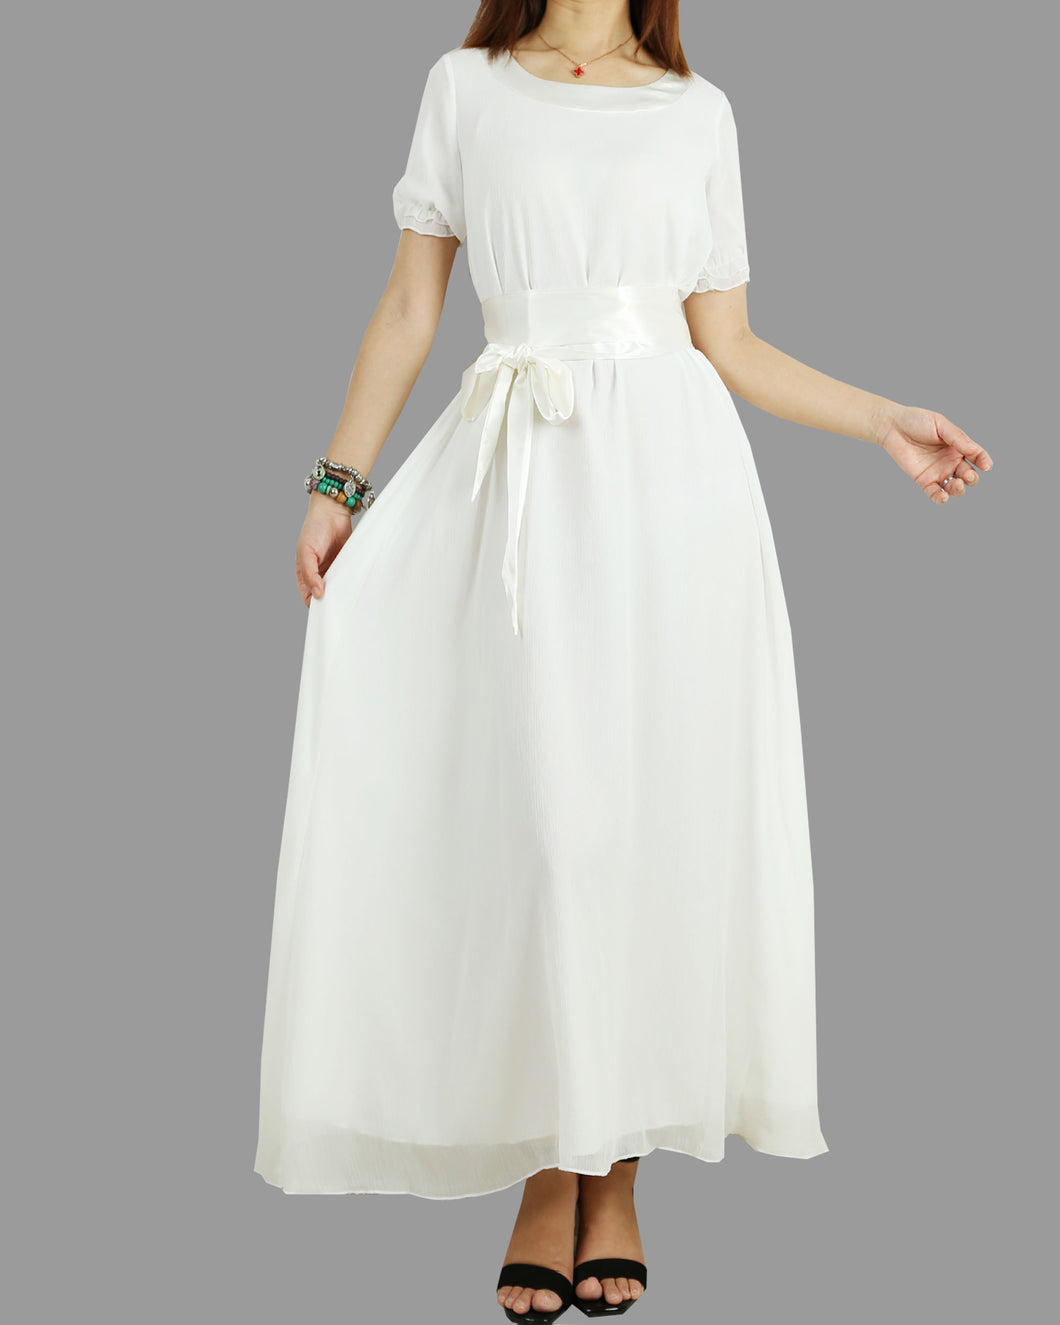 Bridesmaid dress, Women's Chiffon Long Dress, White dress, wedding dress, maxi dress, evening dress(Q1010)